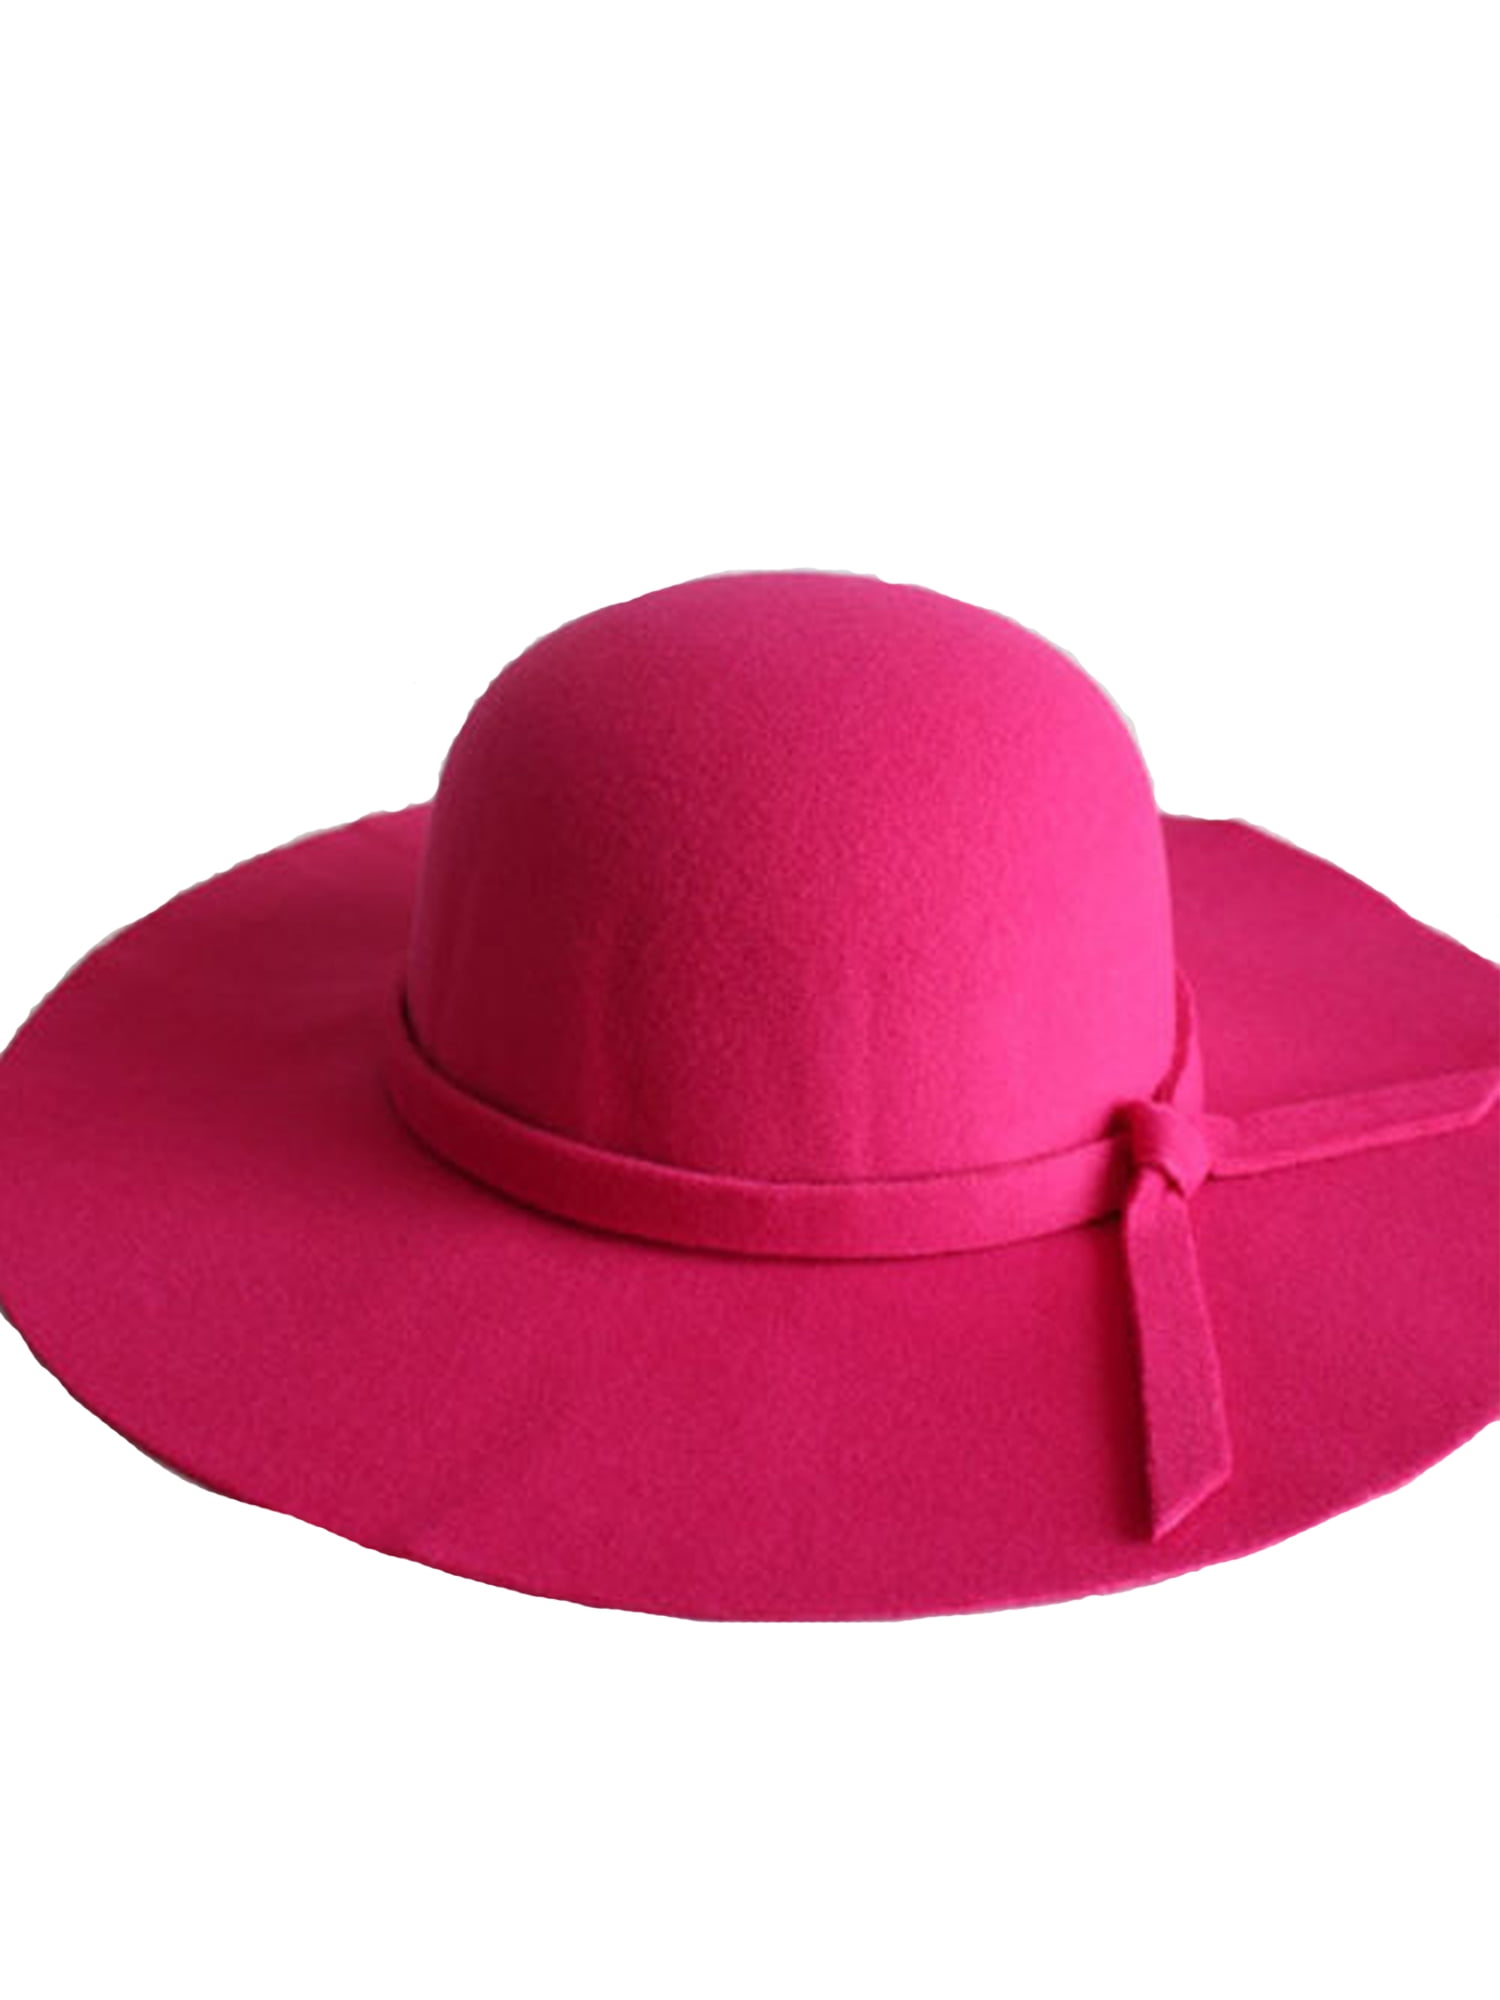 Women Vintage Wide Brim Floppy Warm Felt Hat Trilby Bowler 6